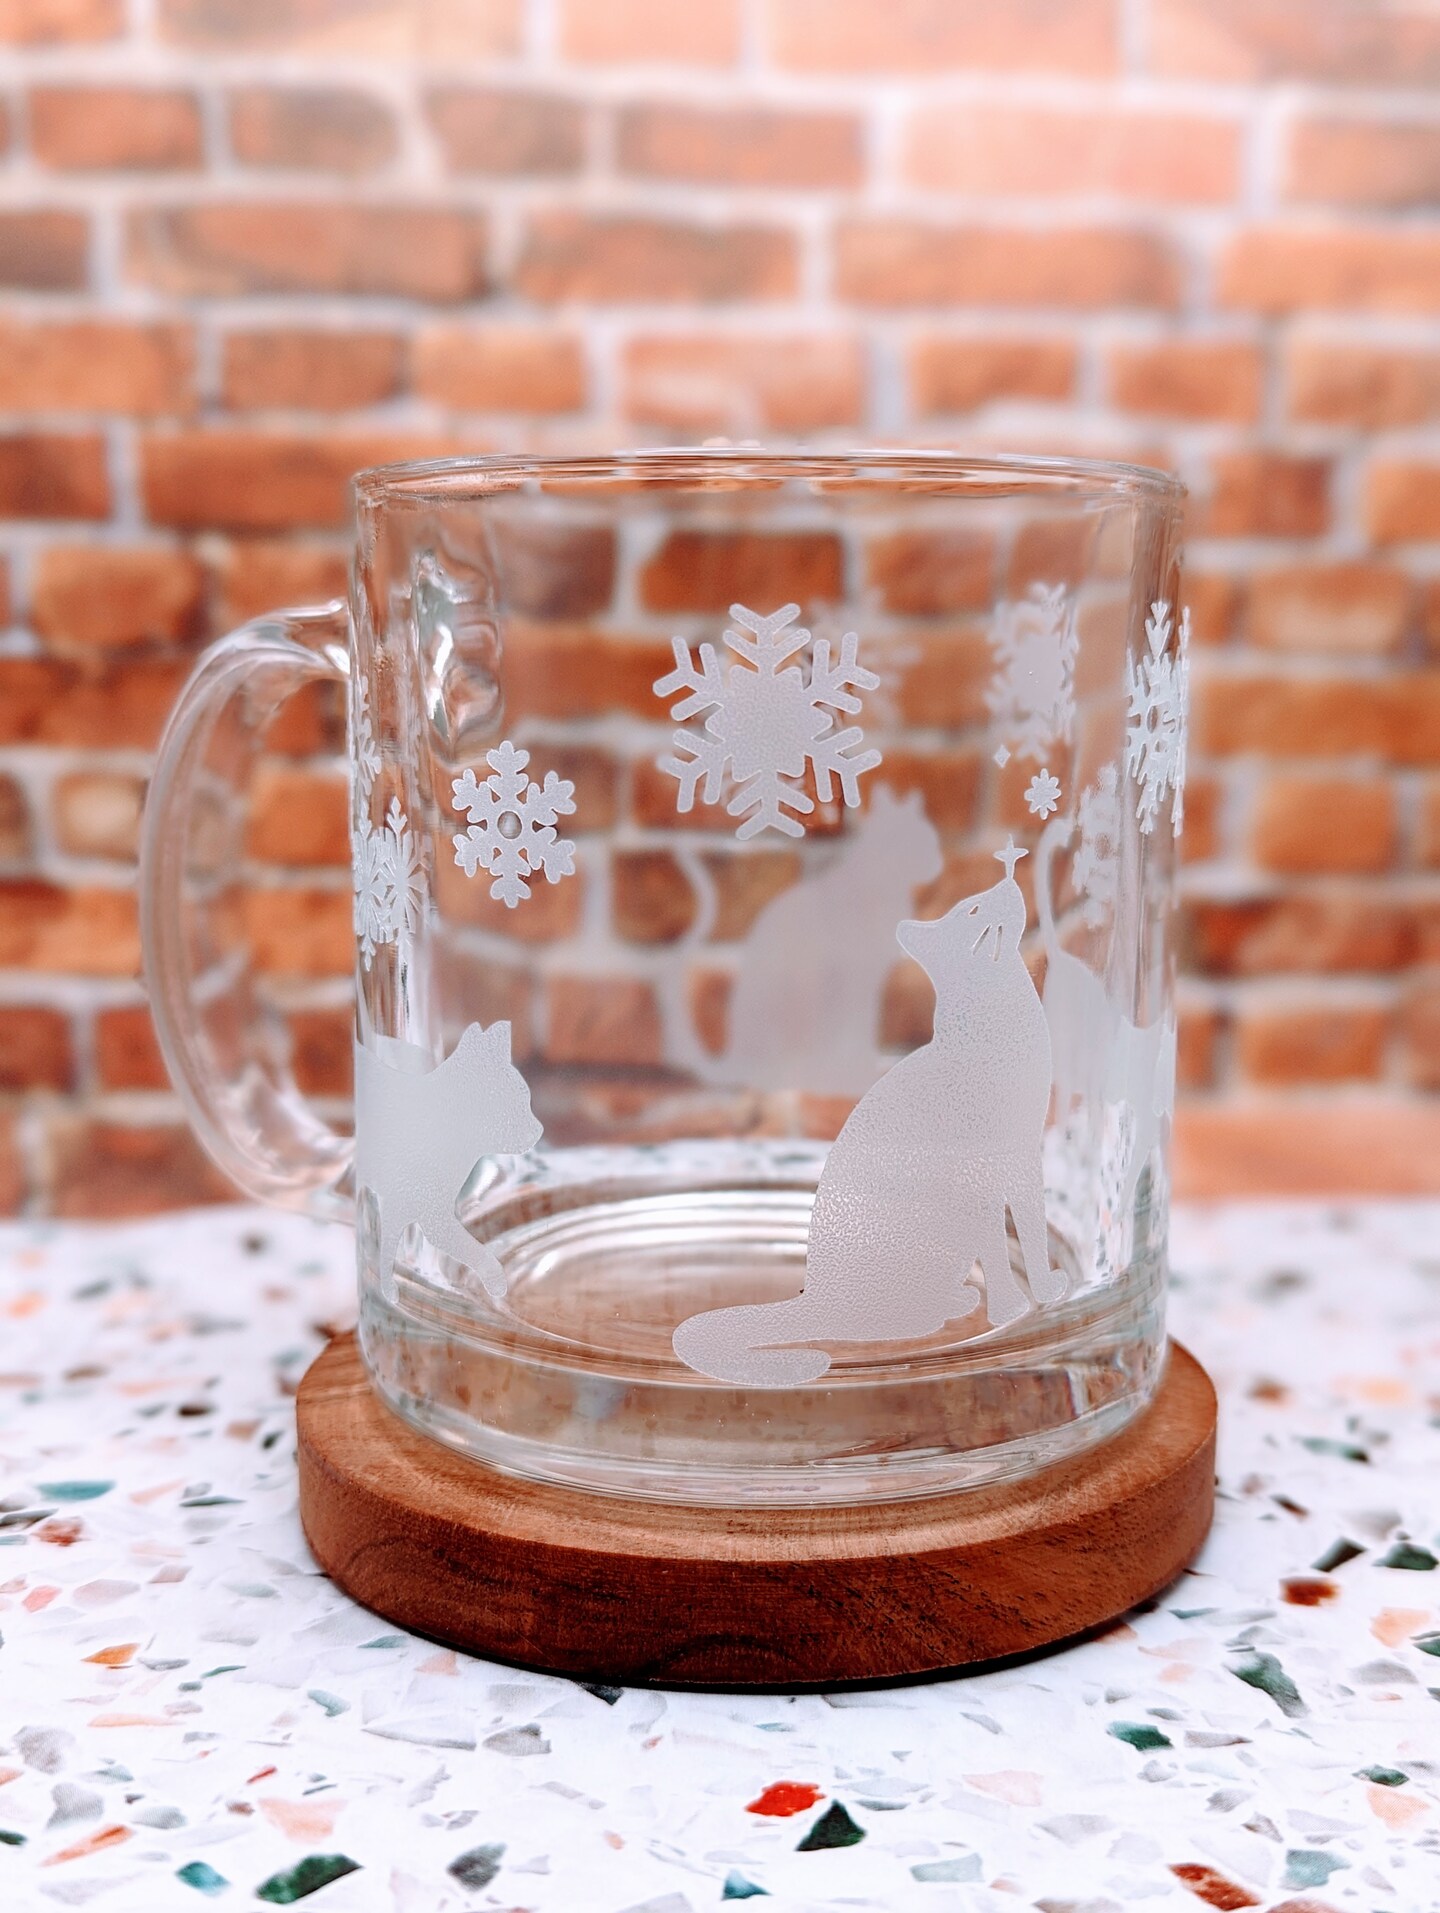 Libbey Robusta Glass Mugs, Set of 4,13 ounce: Glass